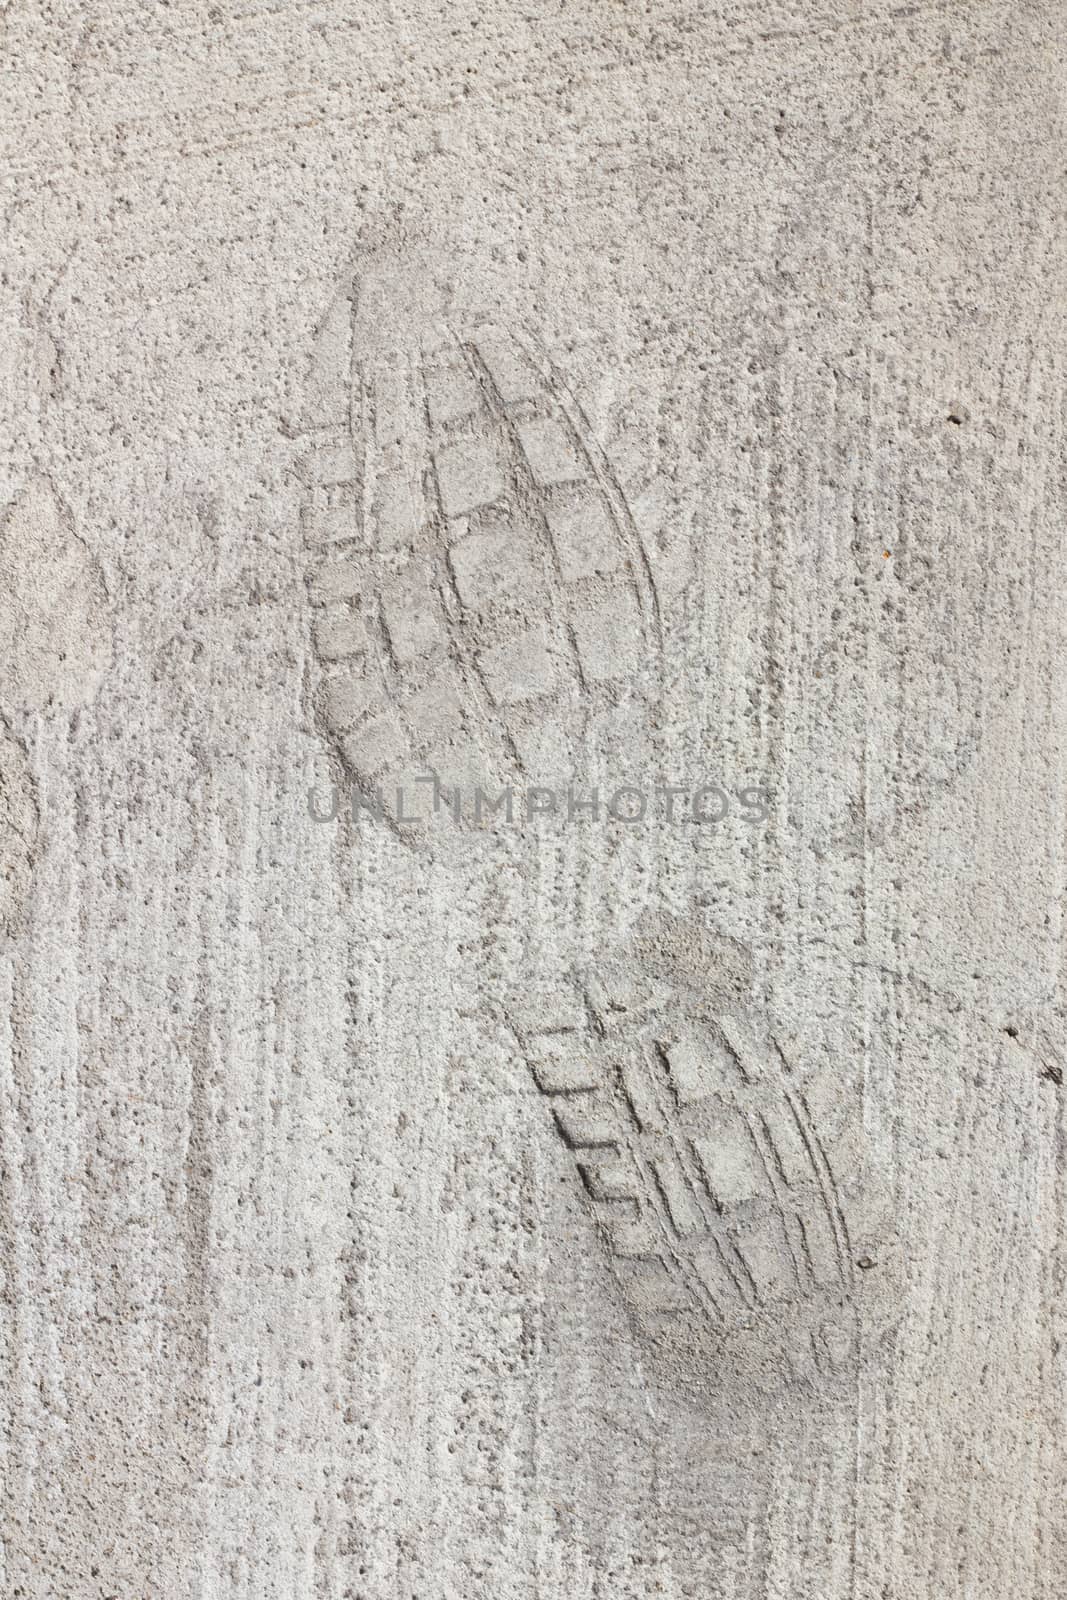 Man footprints on concrete track